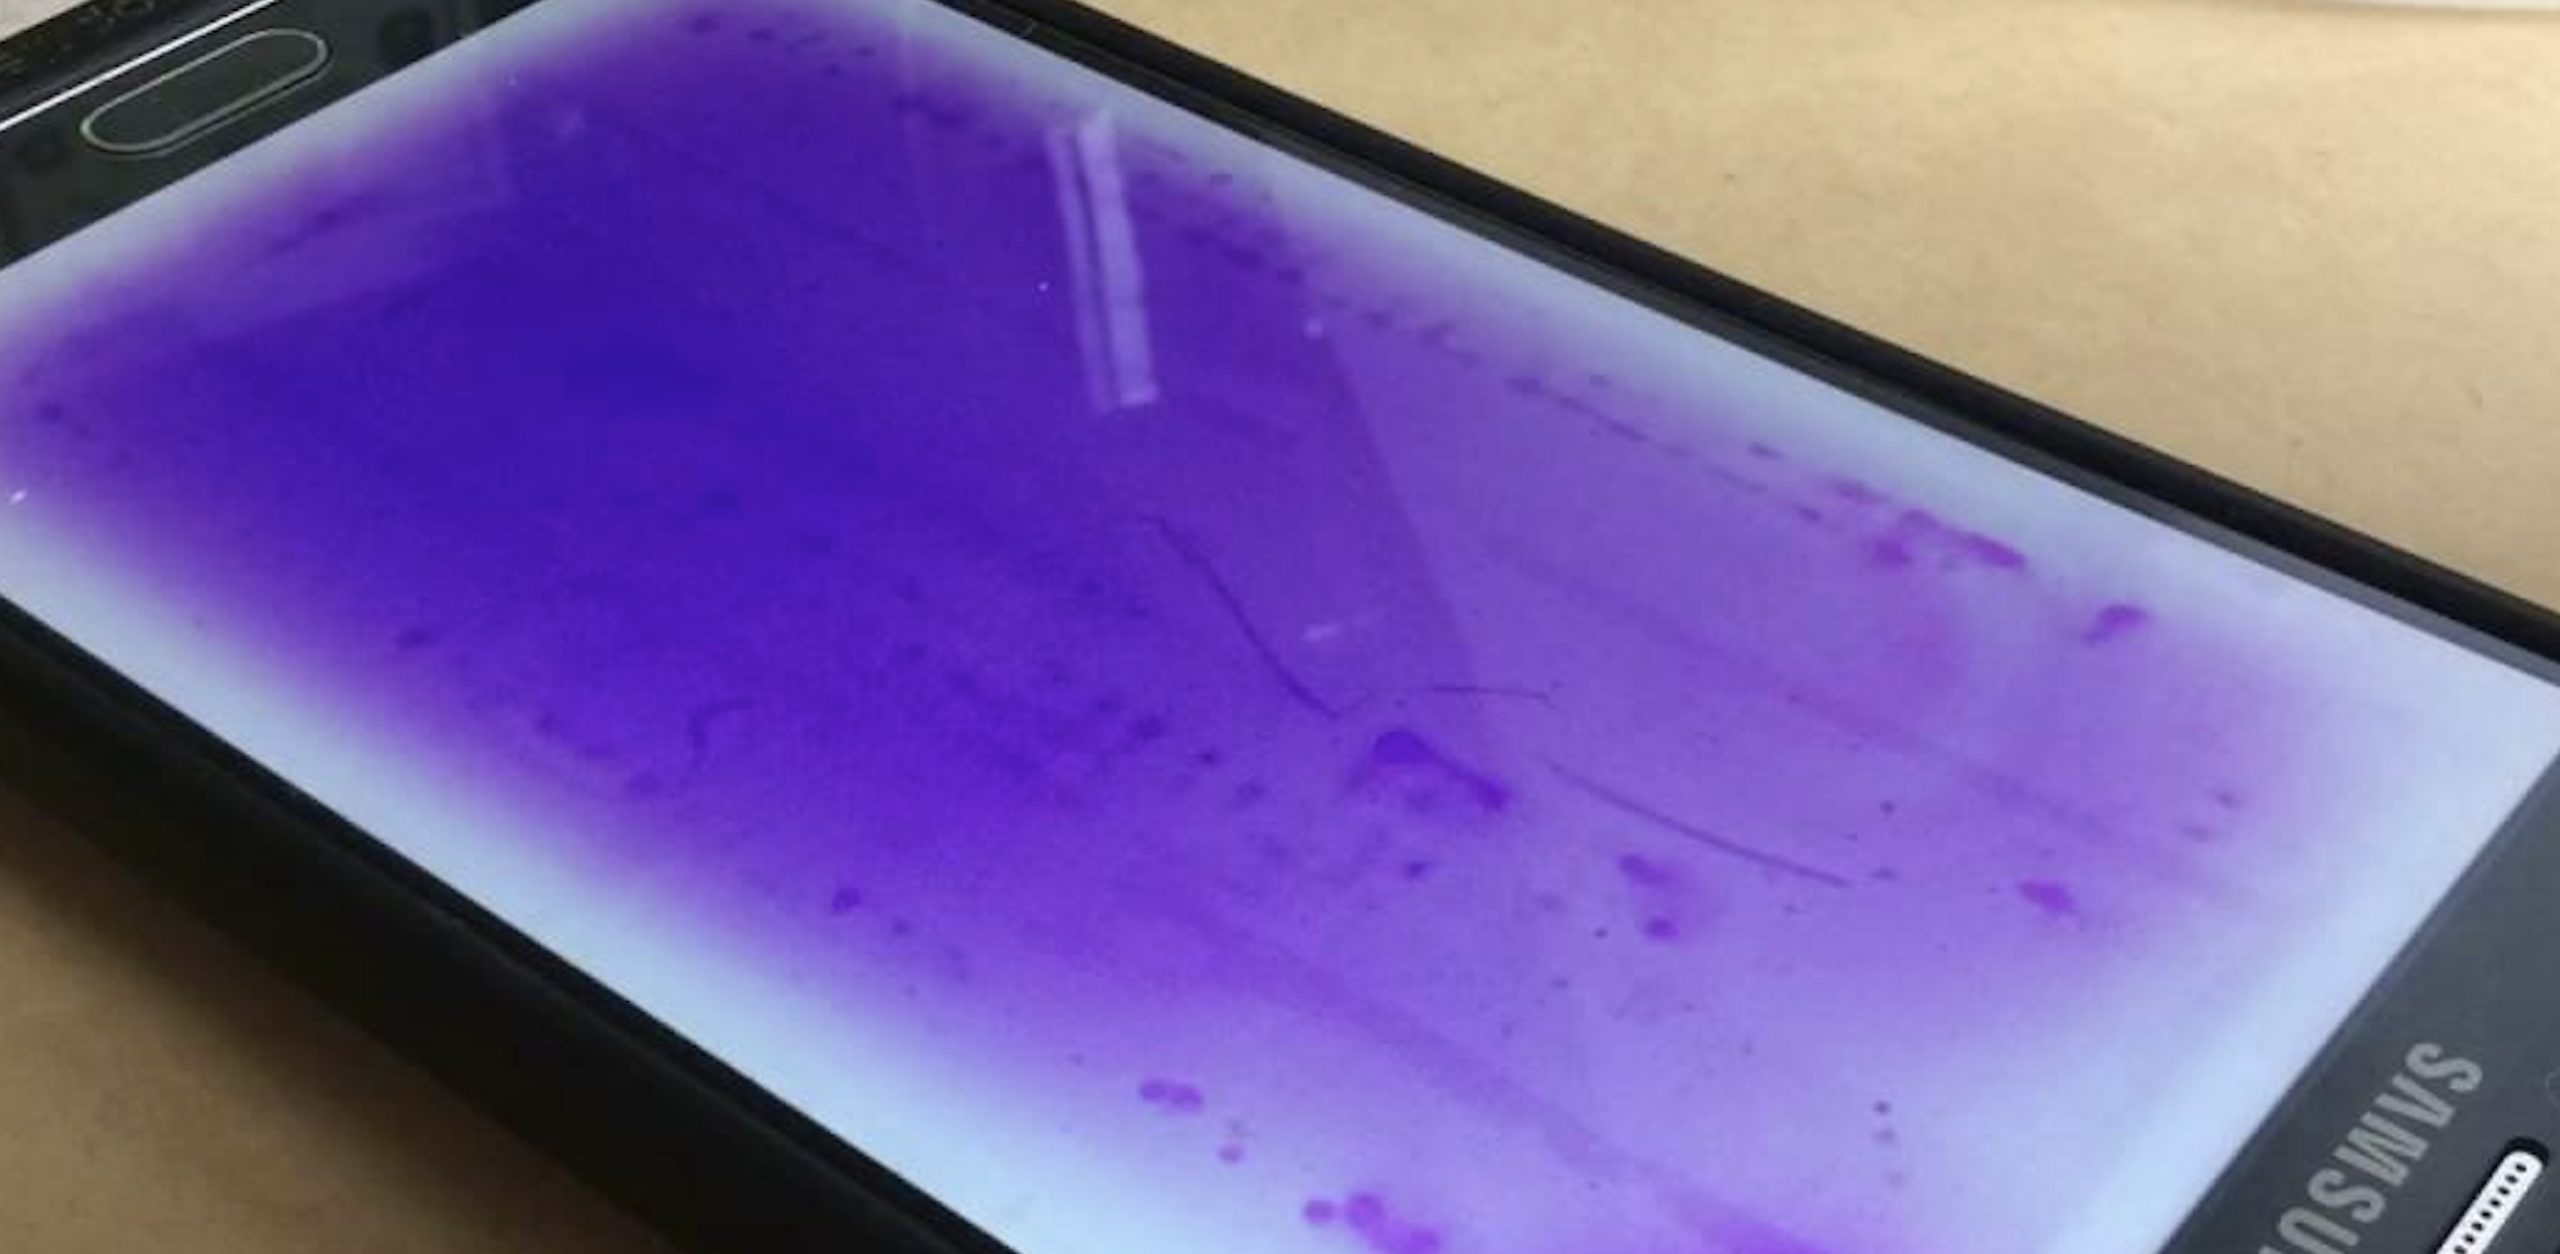 How to Fix Samsung Galaxy S6 Purple Screen